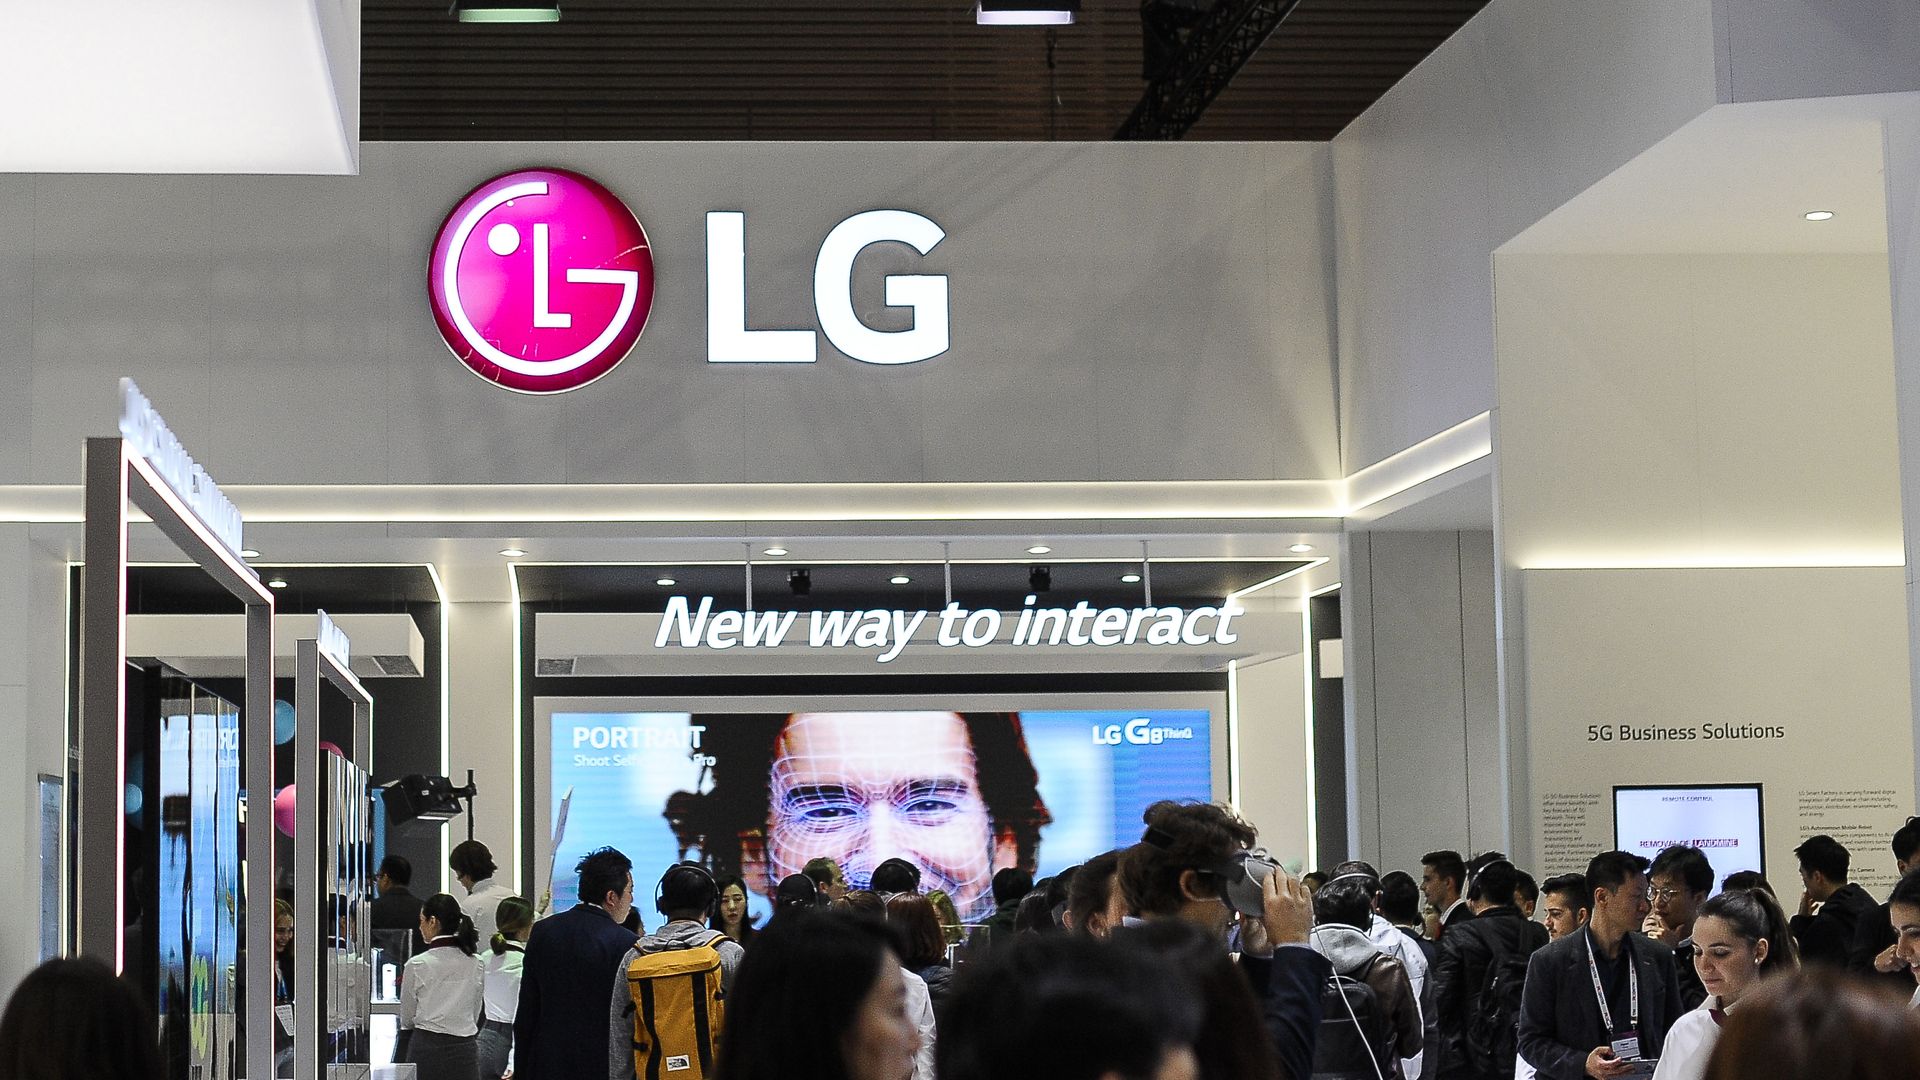 The LG logo.